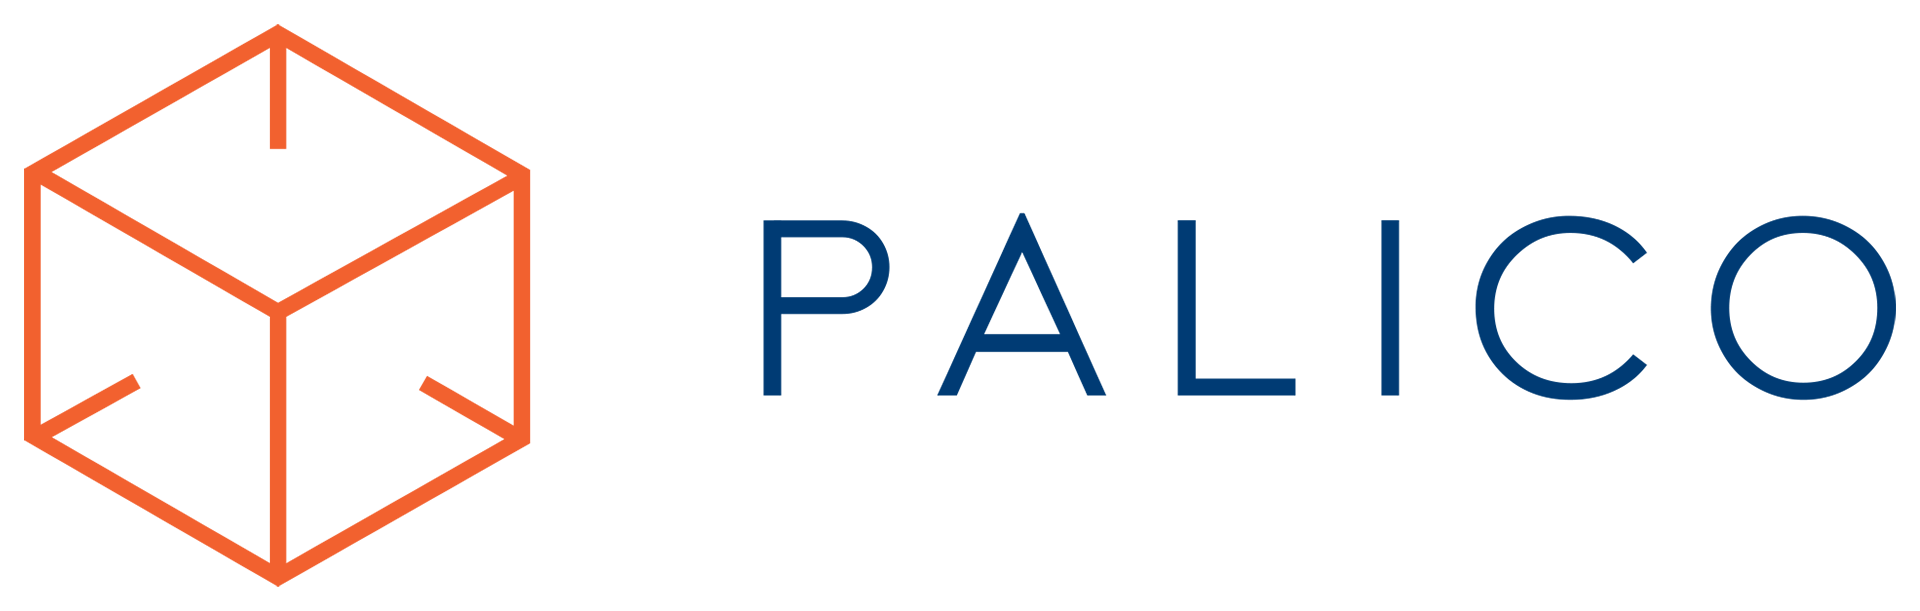 Palico_Logo_1920x611